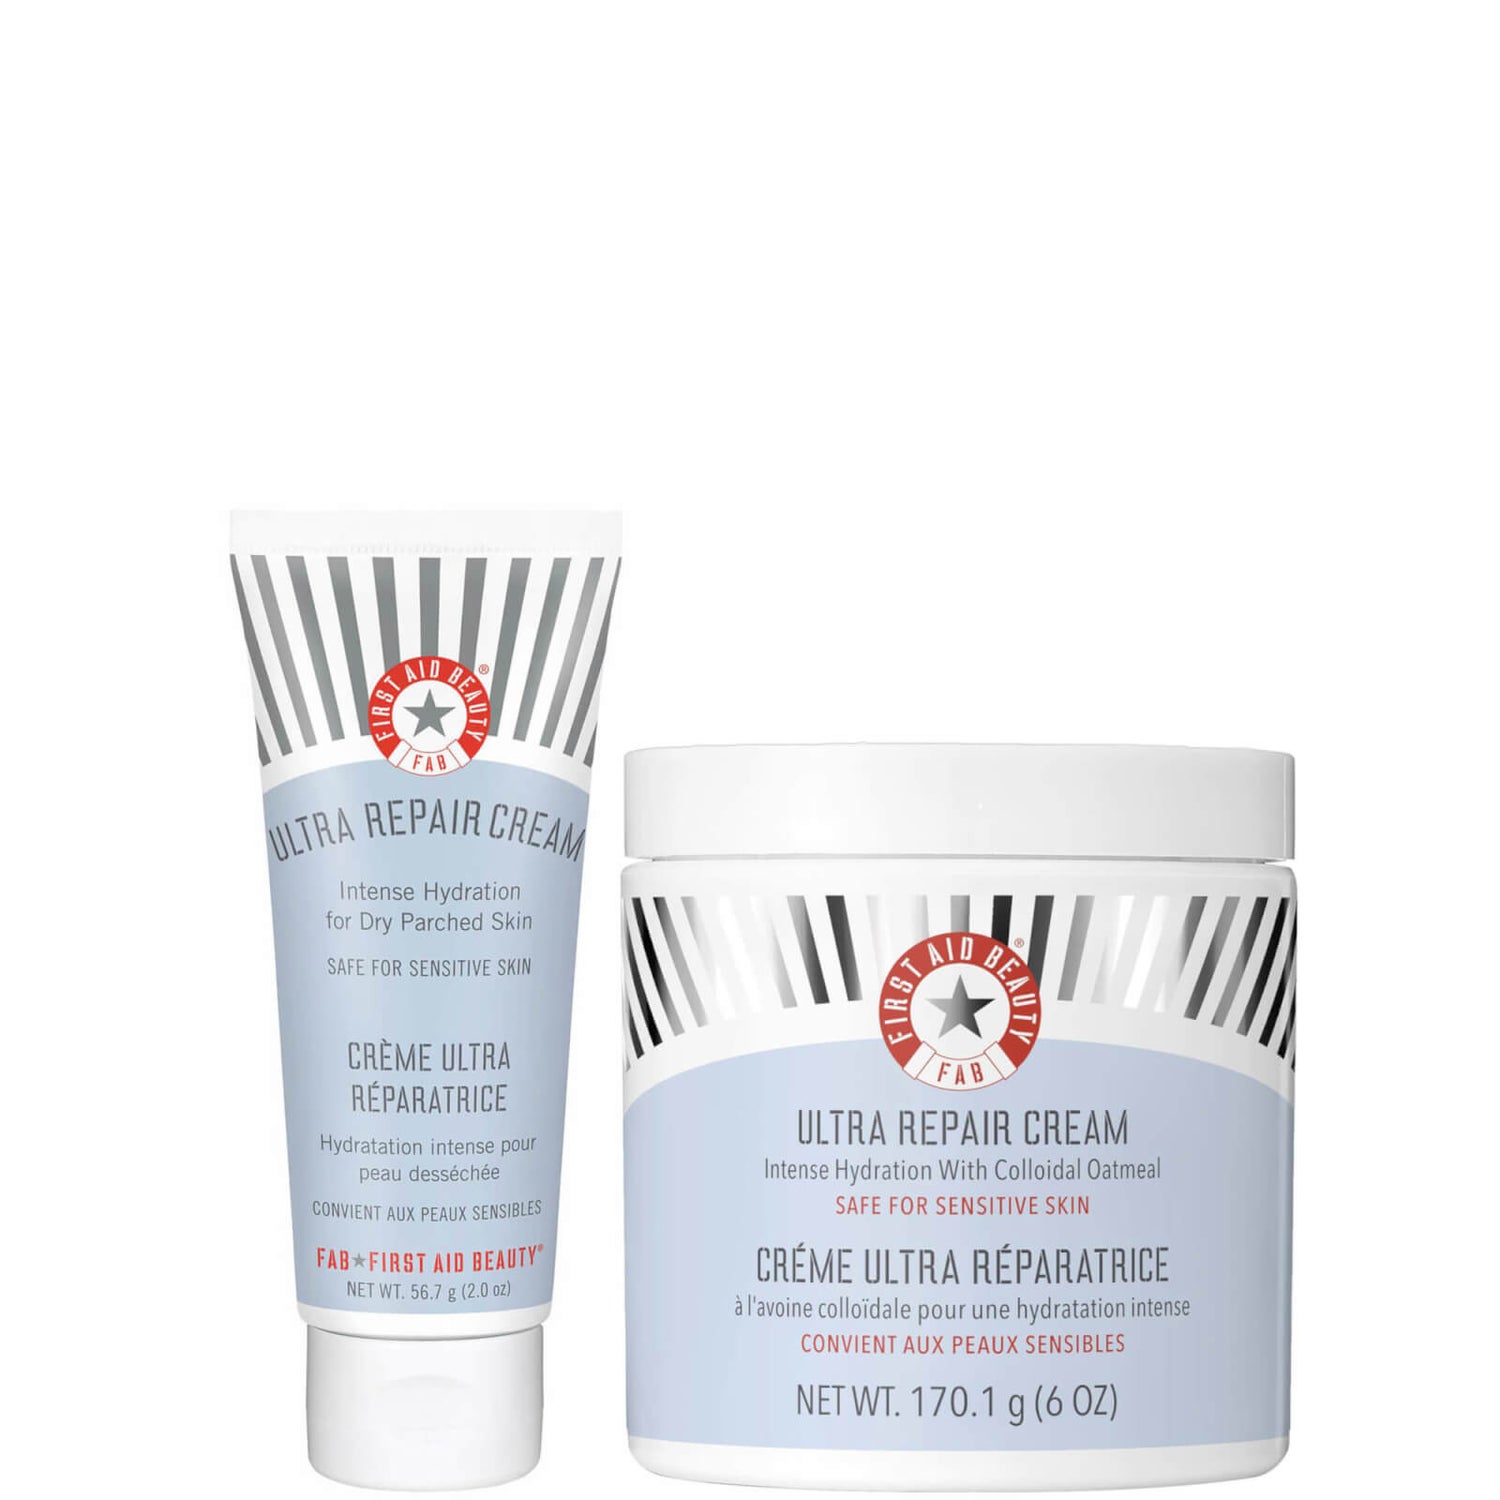 First Aid Beauty Ultra Repair Cream Bundle